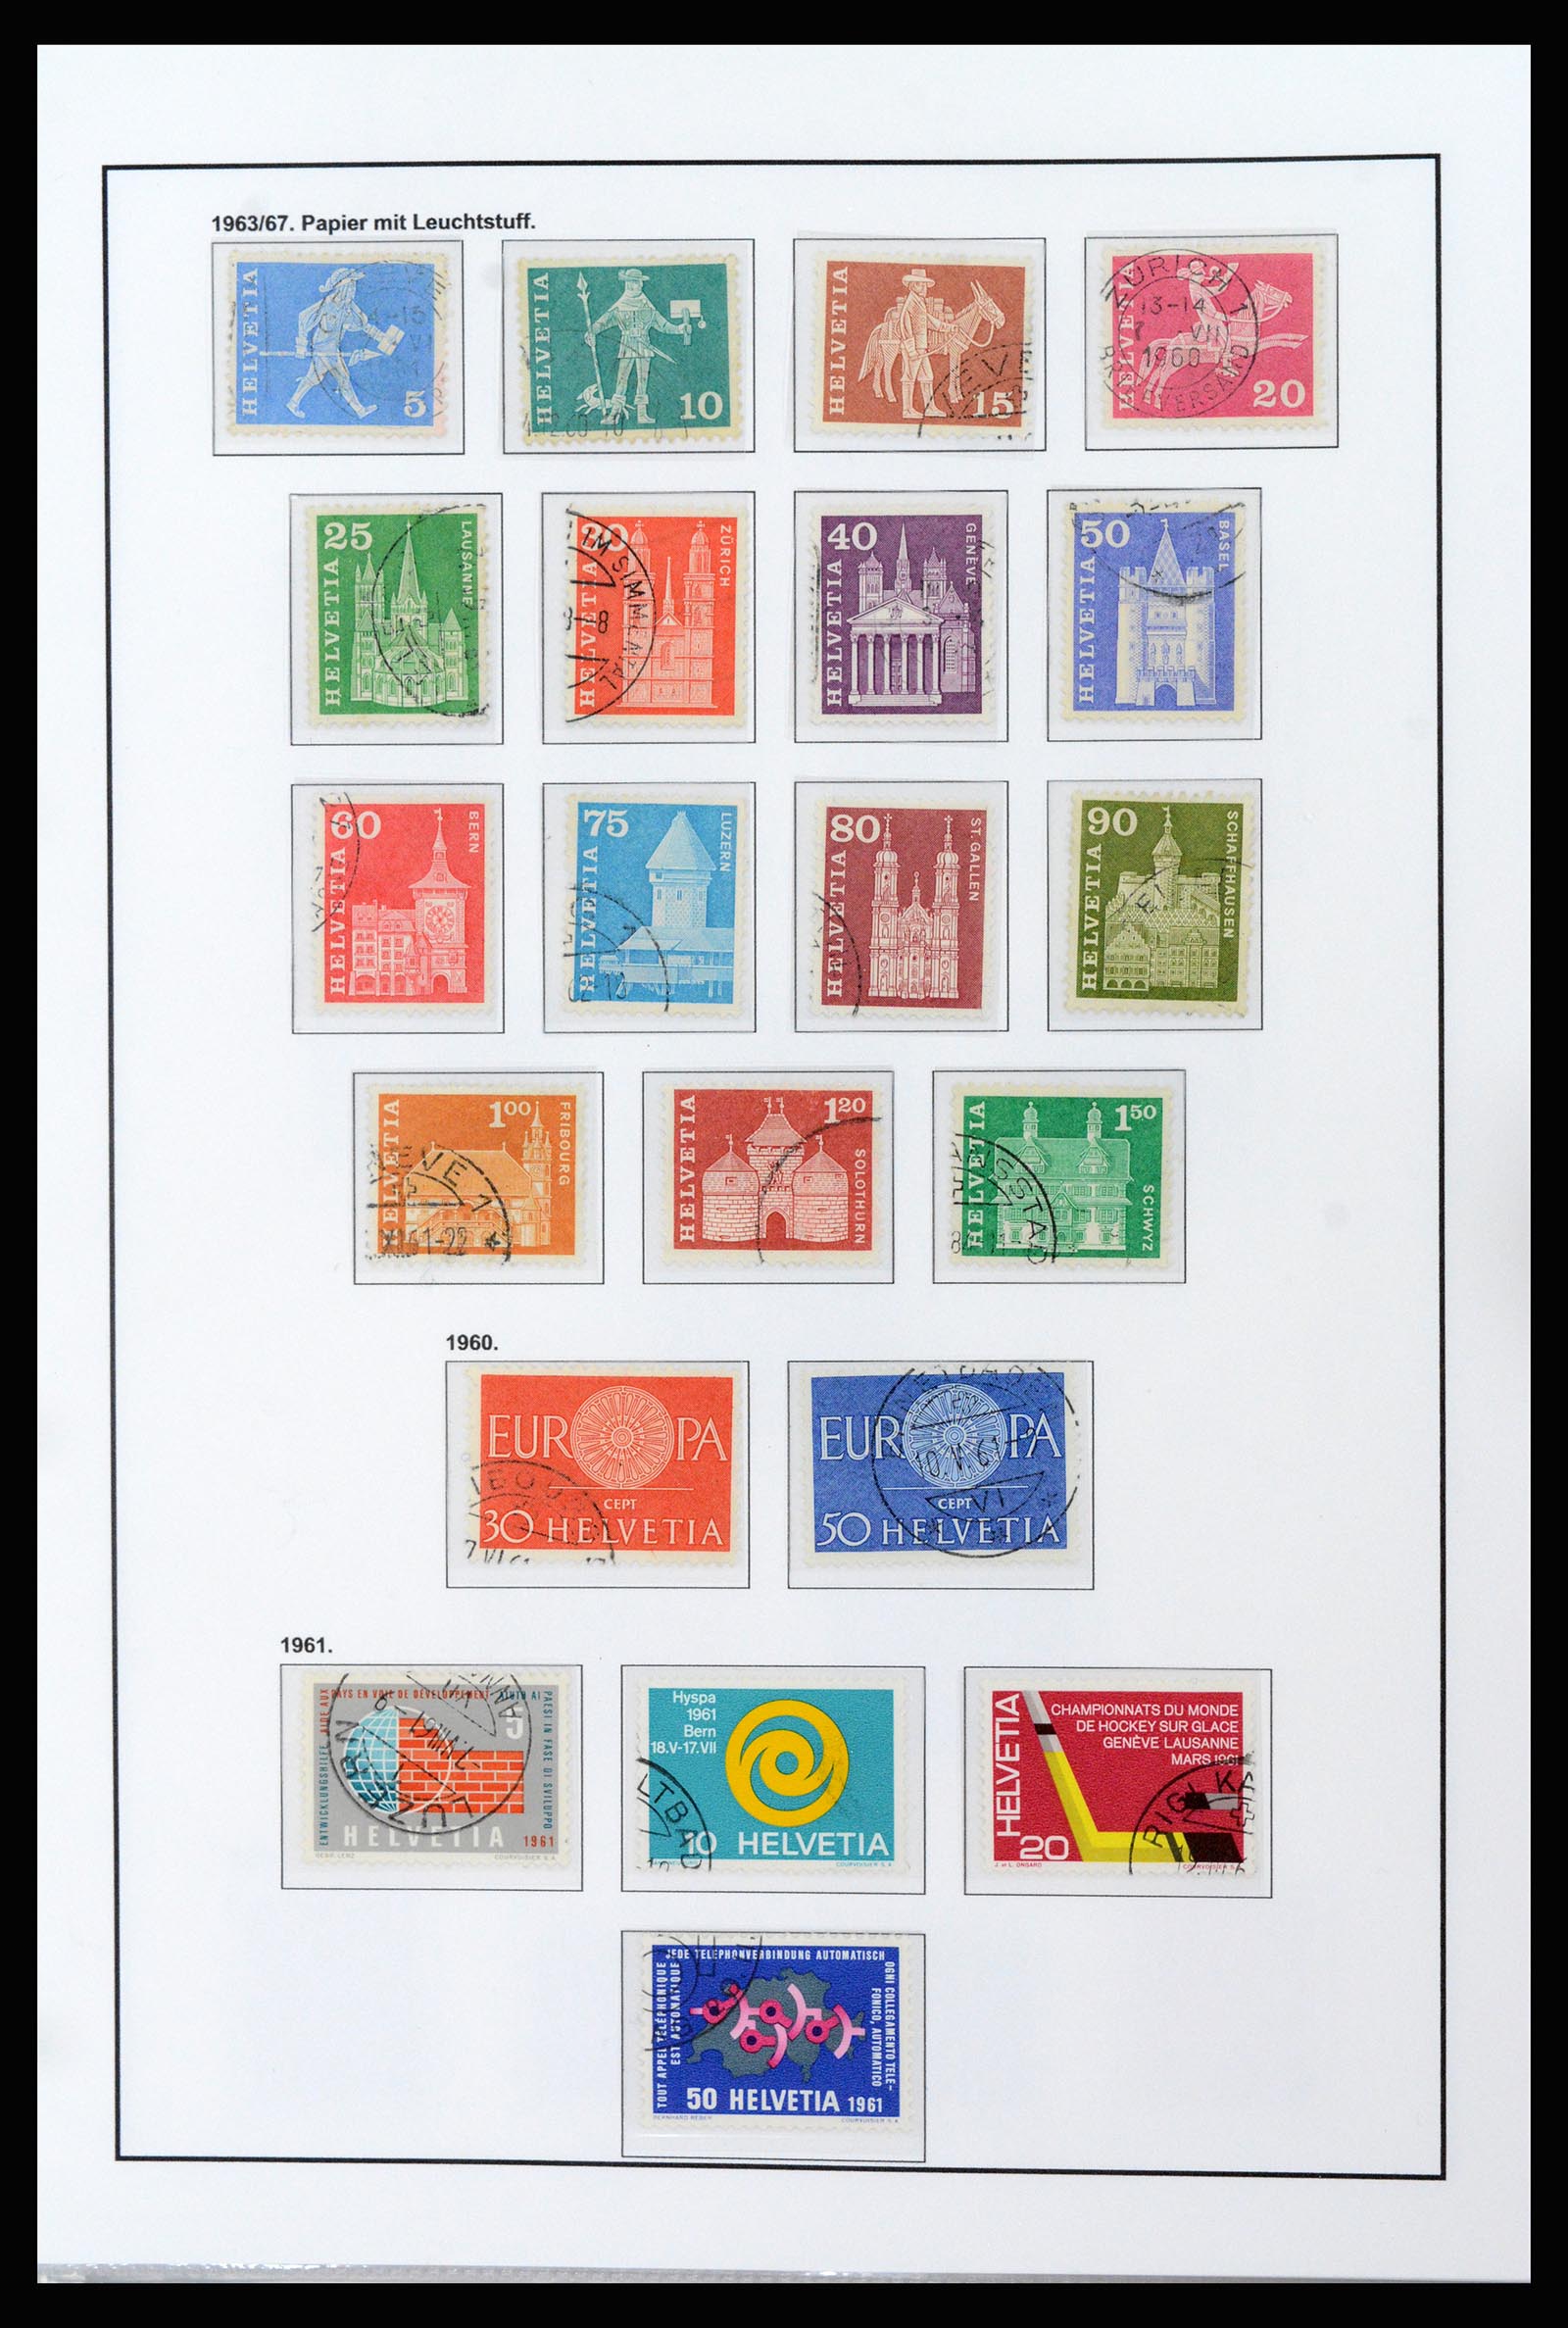 37225 021 - Stamp collection 37225 Switzerland 1854-2020.